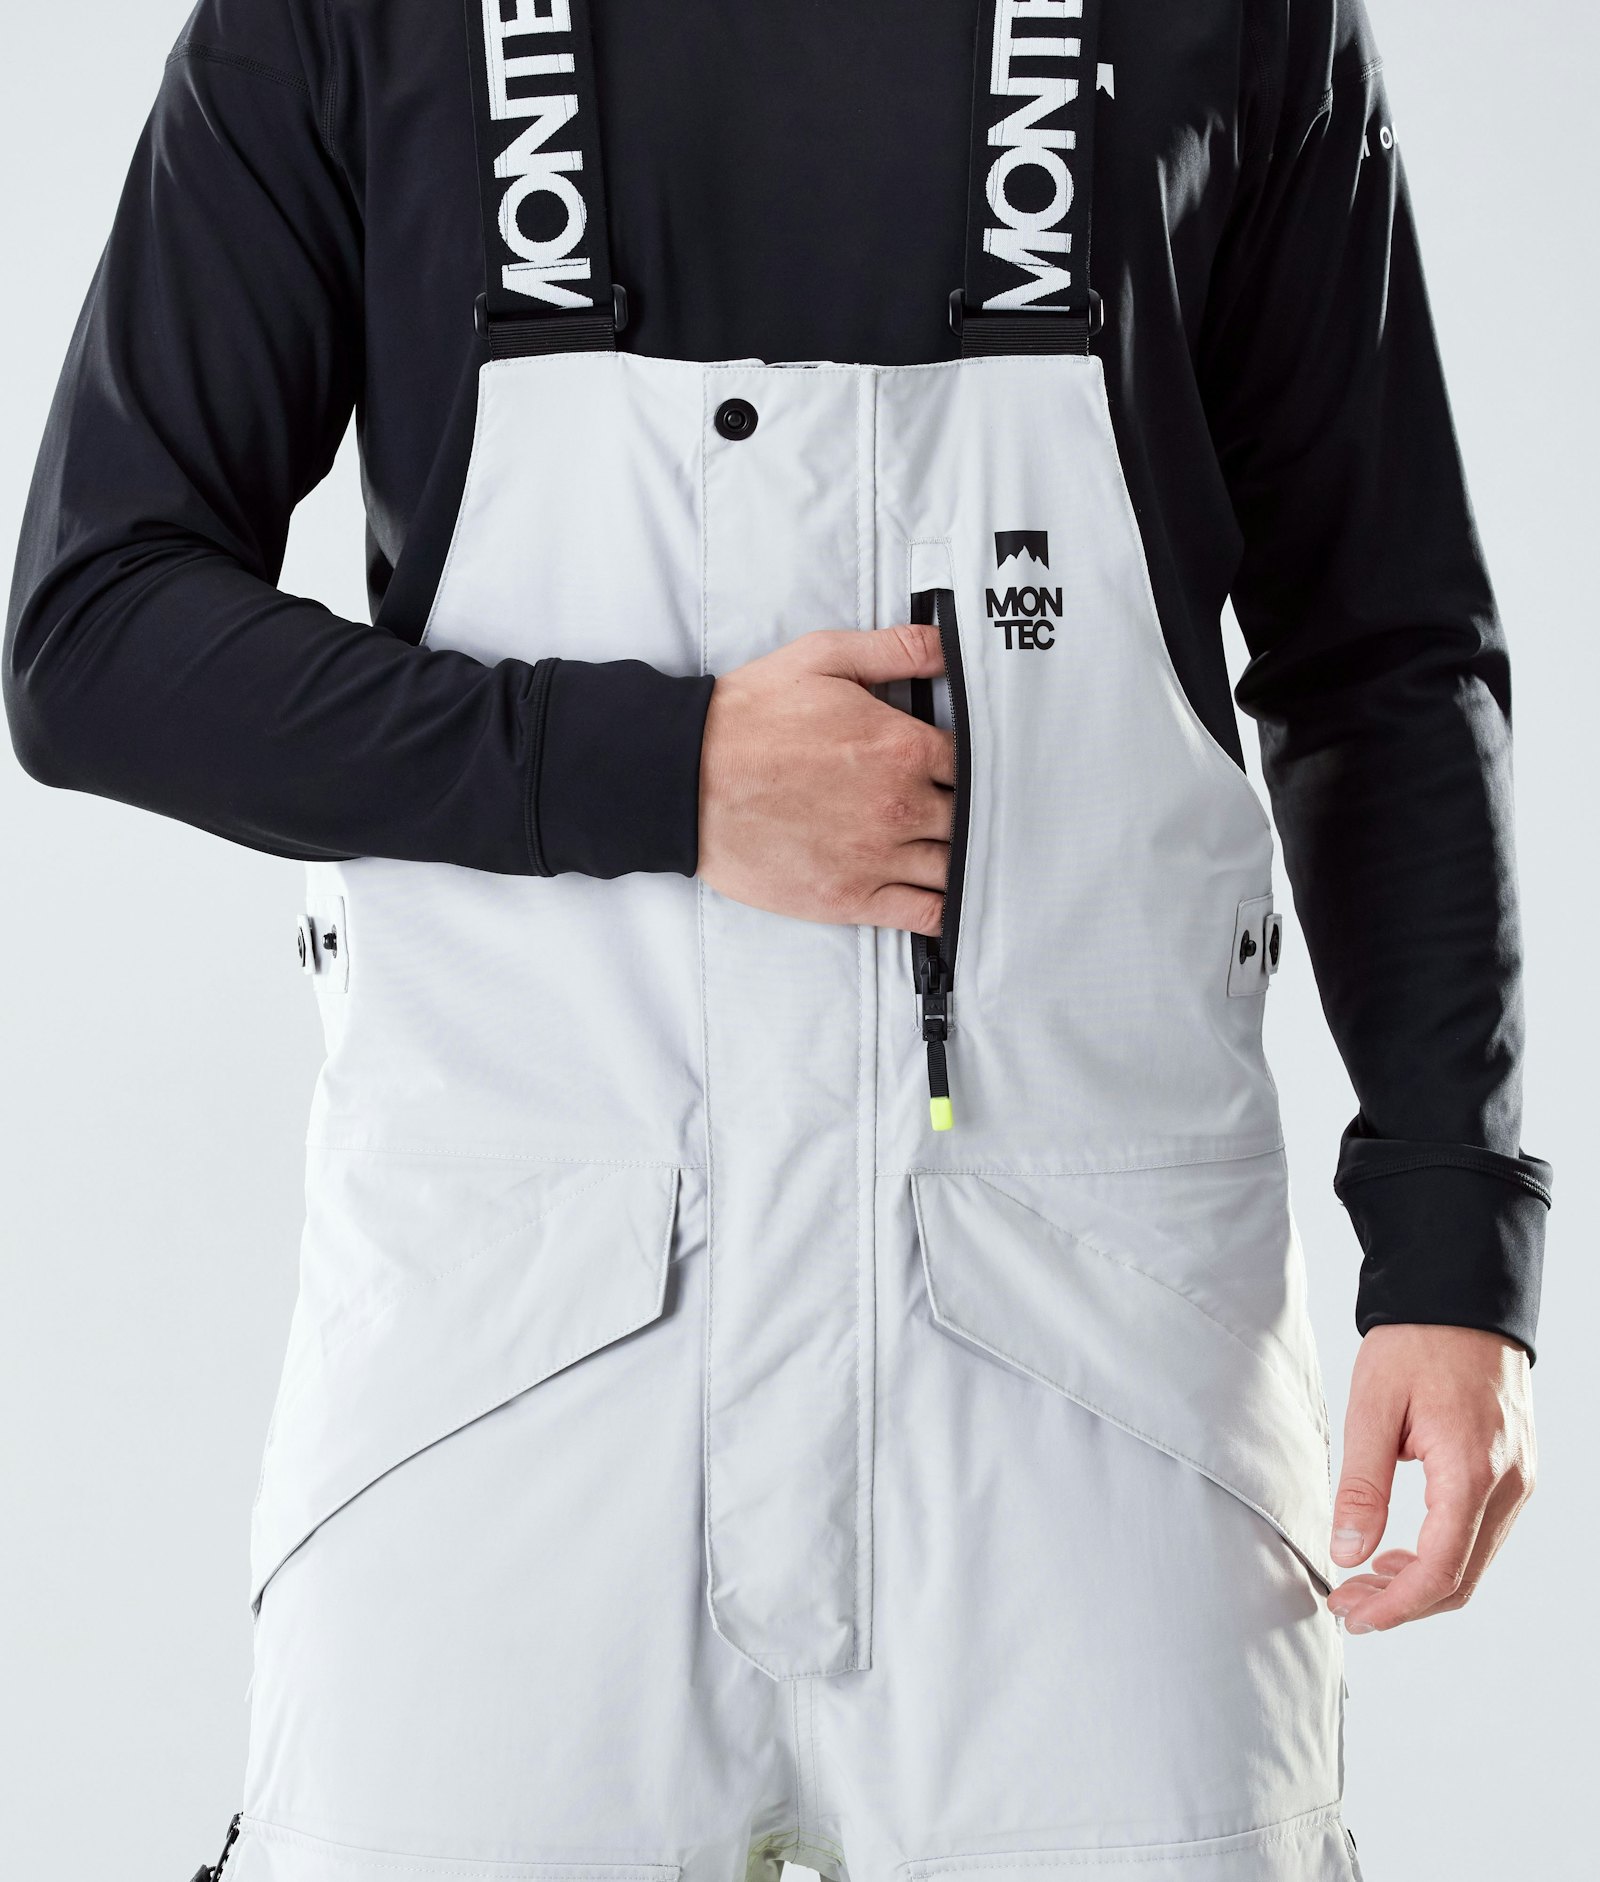 Montec Fawk 2020 Ski Pants Men Light Grey/Neon Yellow/Black